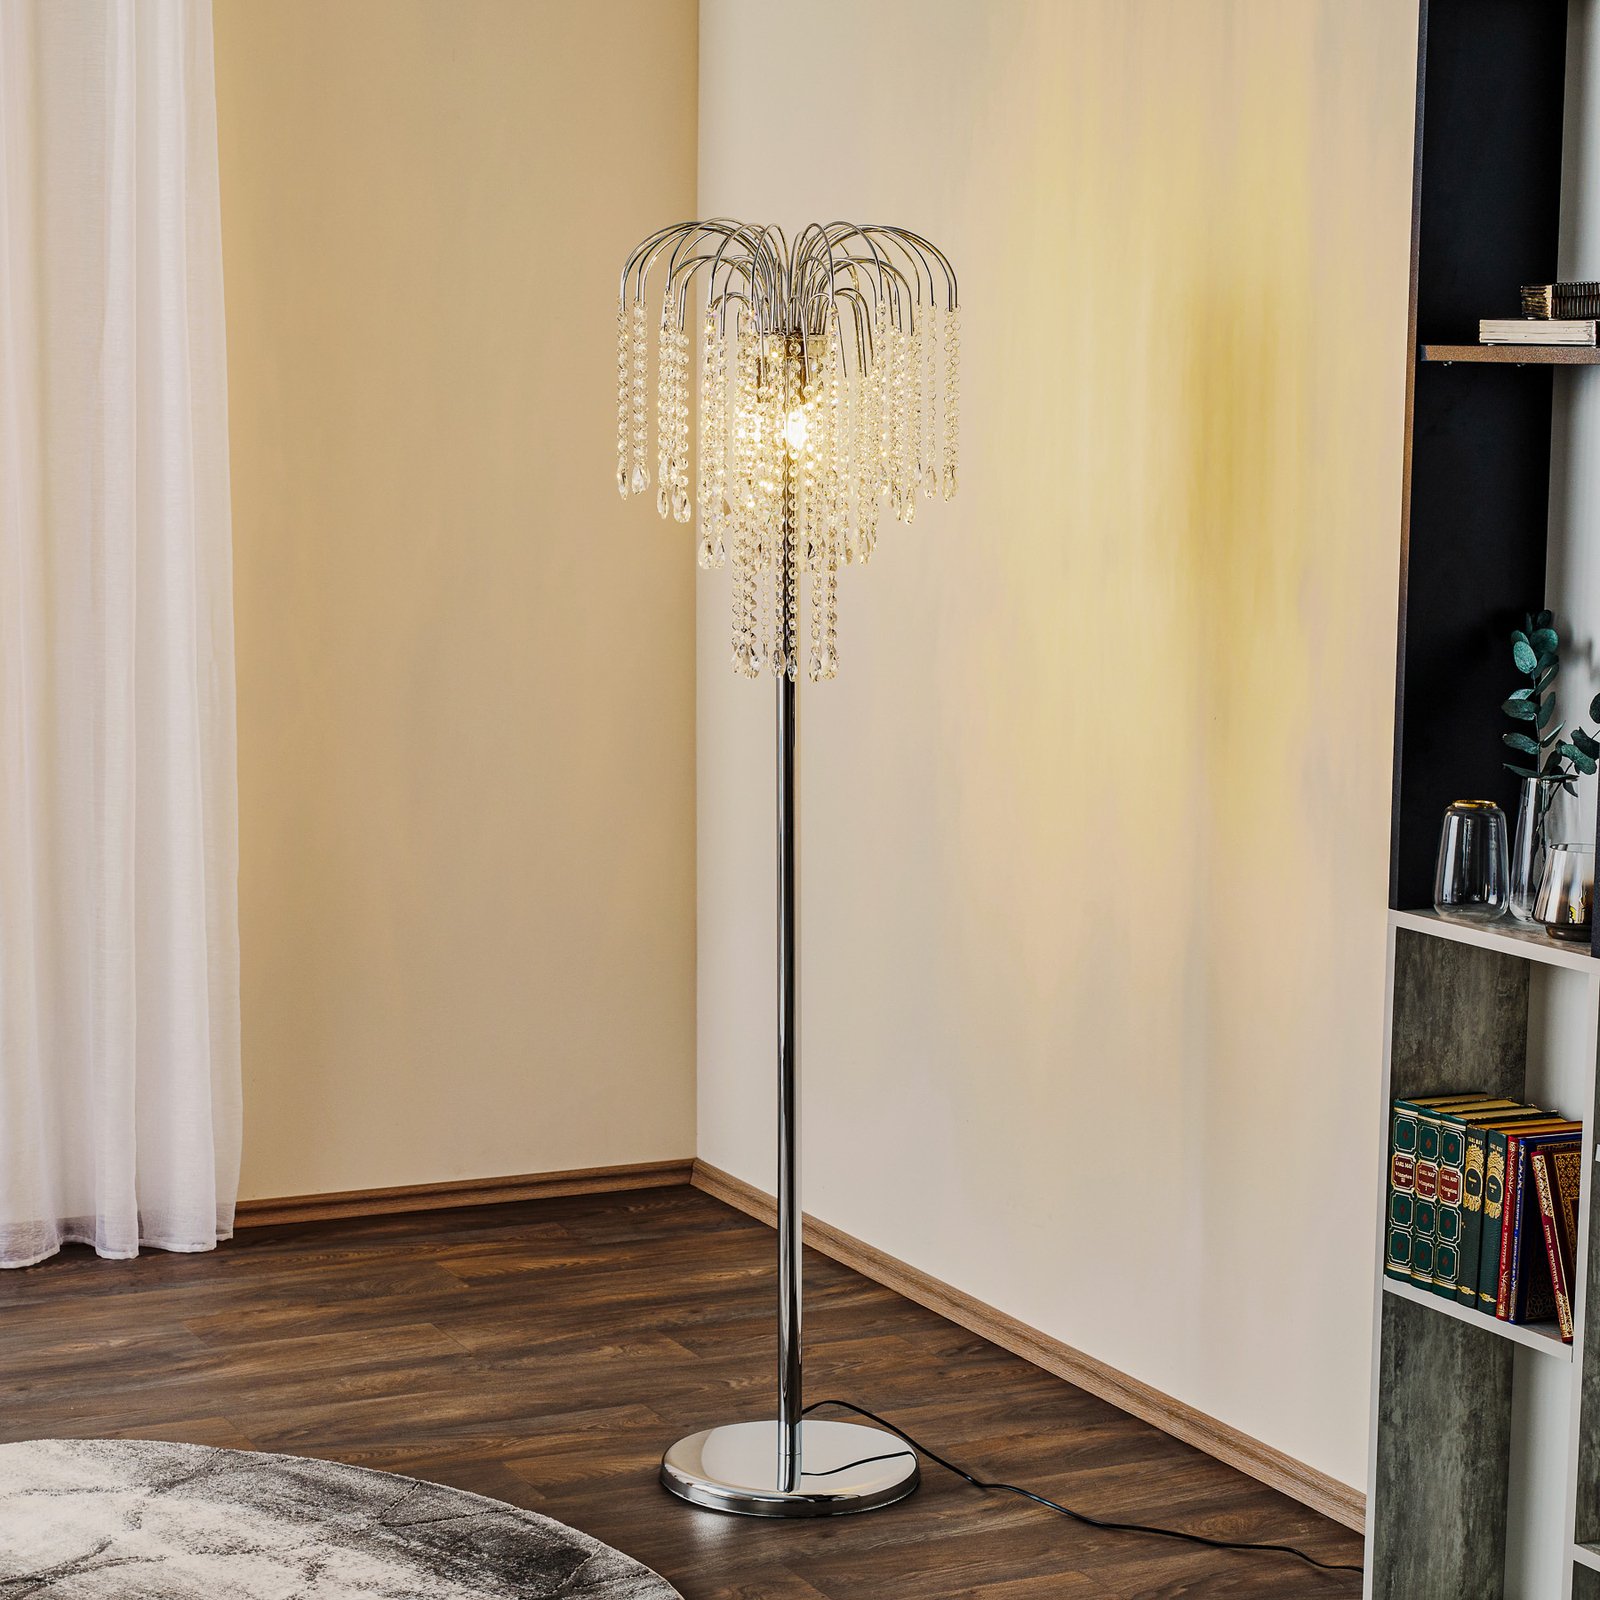 Pioggia floor lamp with crystal rain, chrome